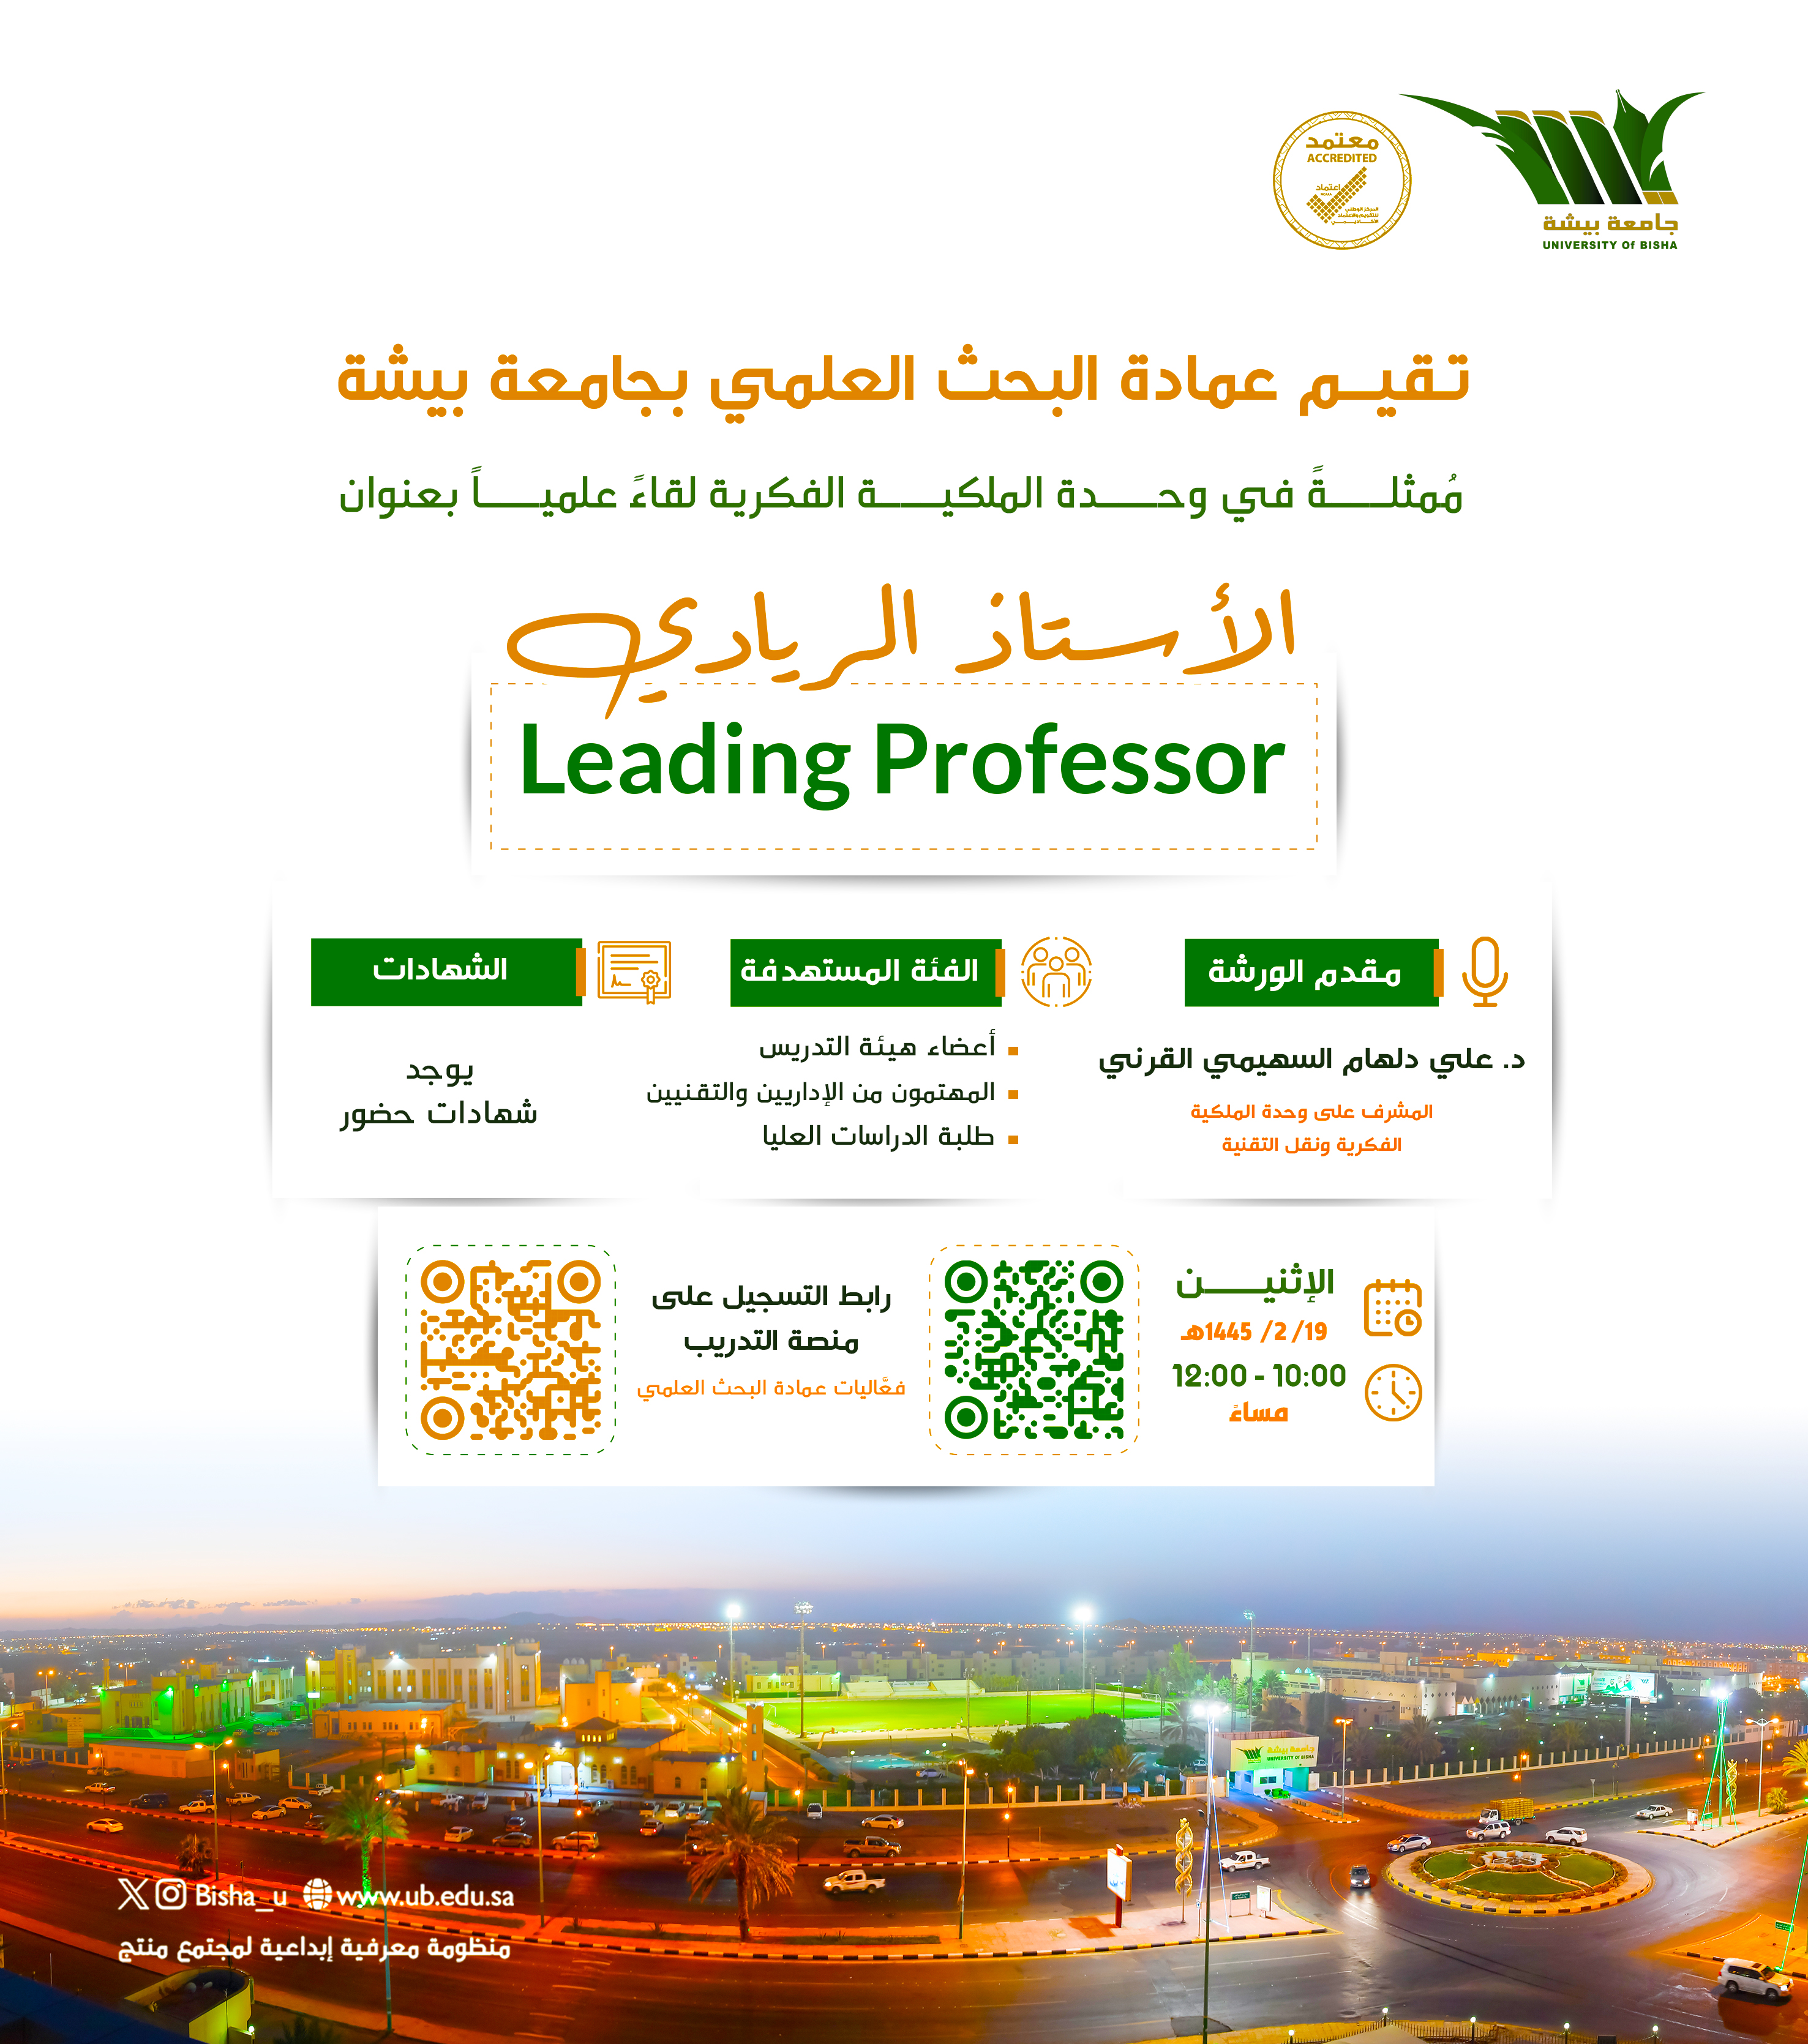 Deanship of Scientific Research organizes a Scientific Meeting entitled: Leading Professor